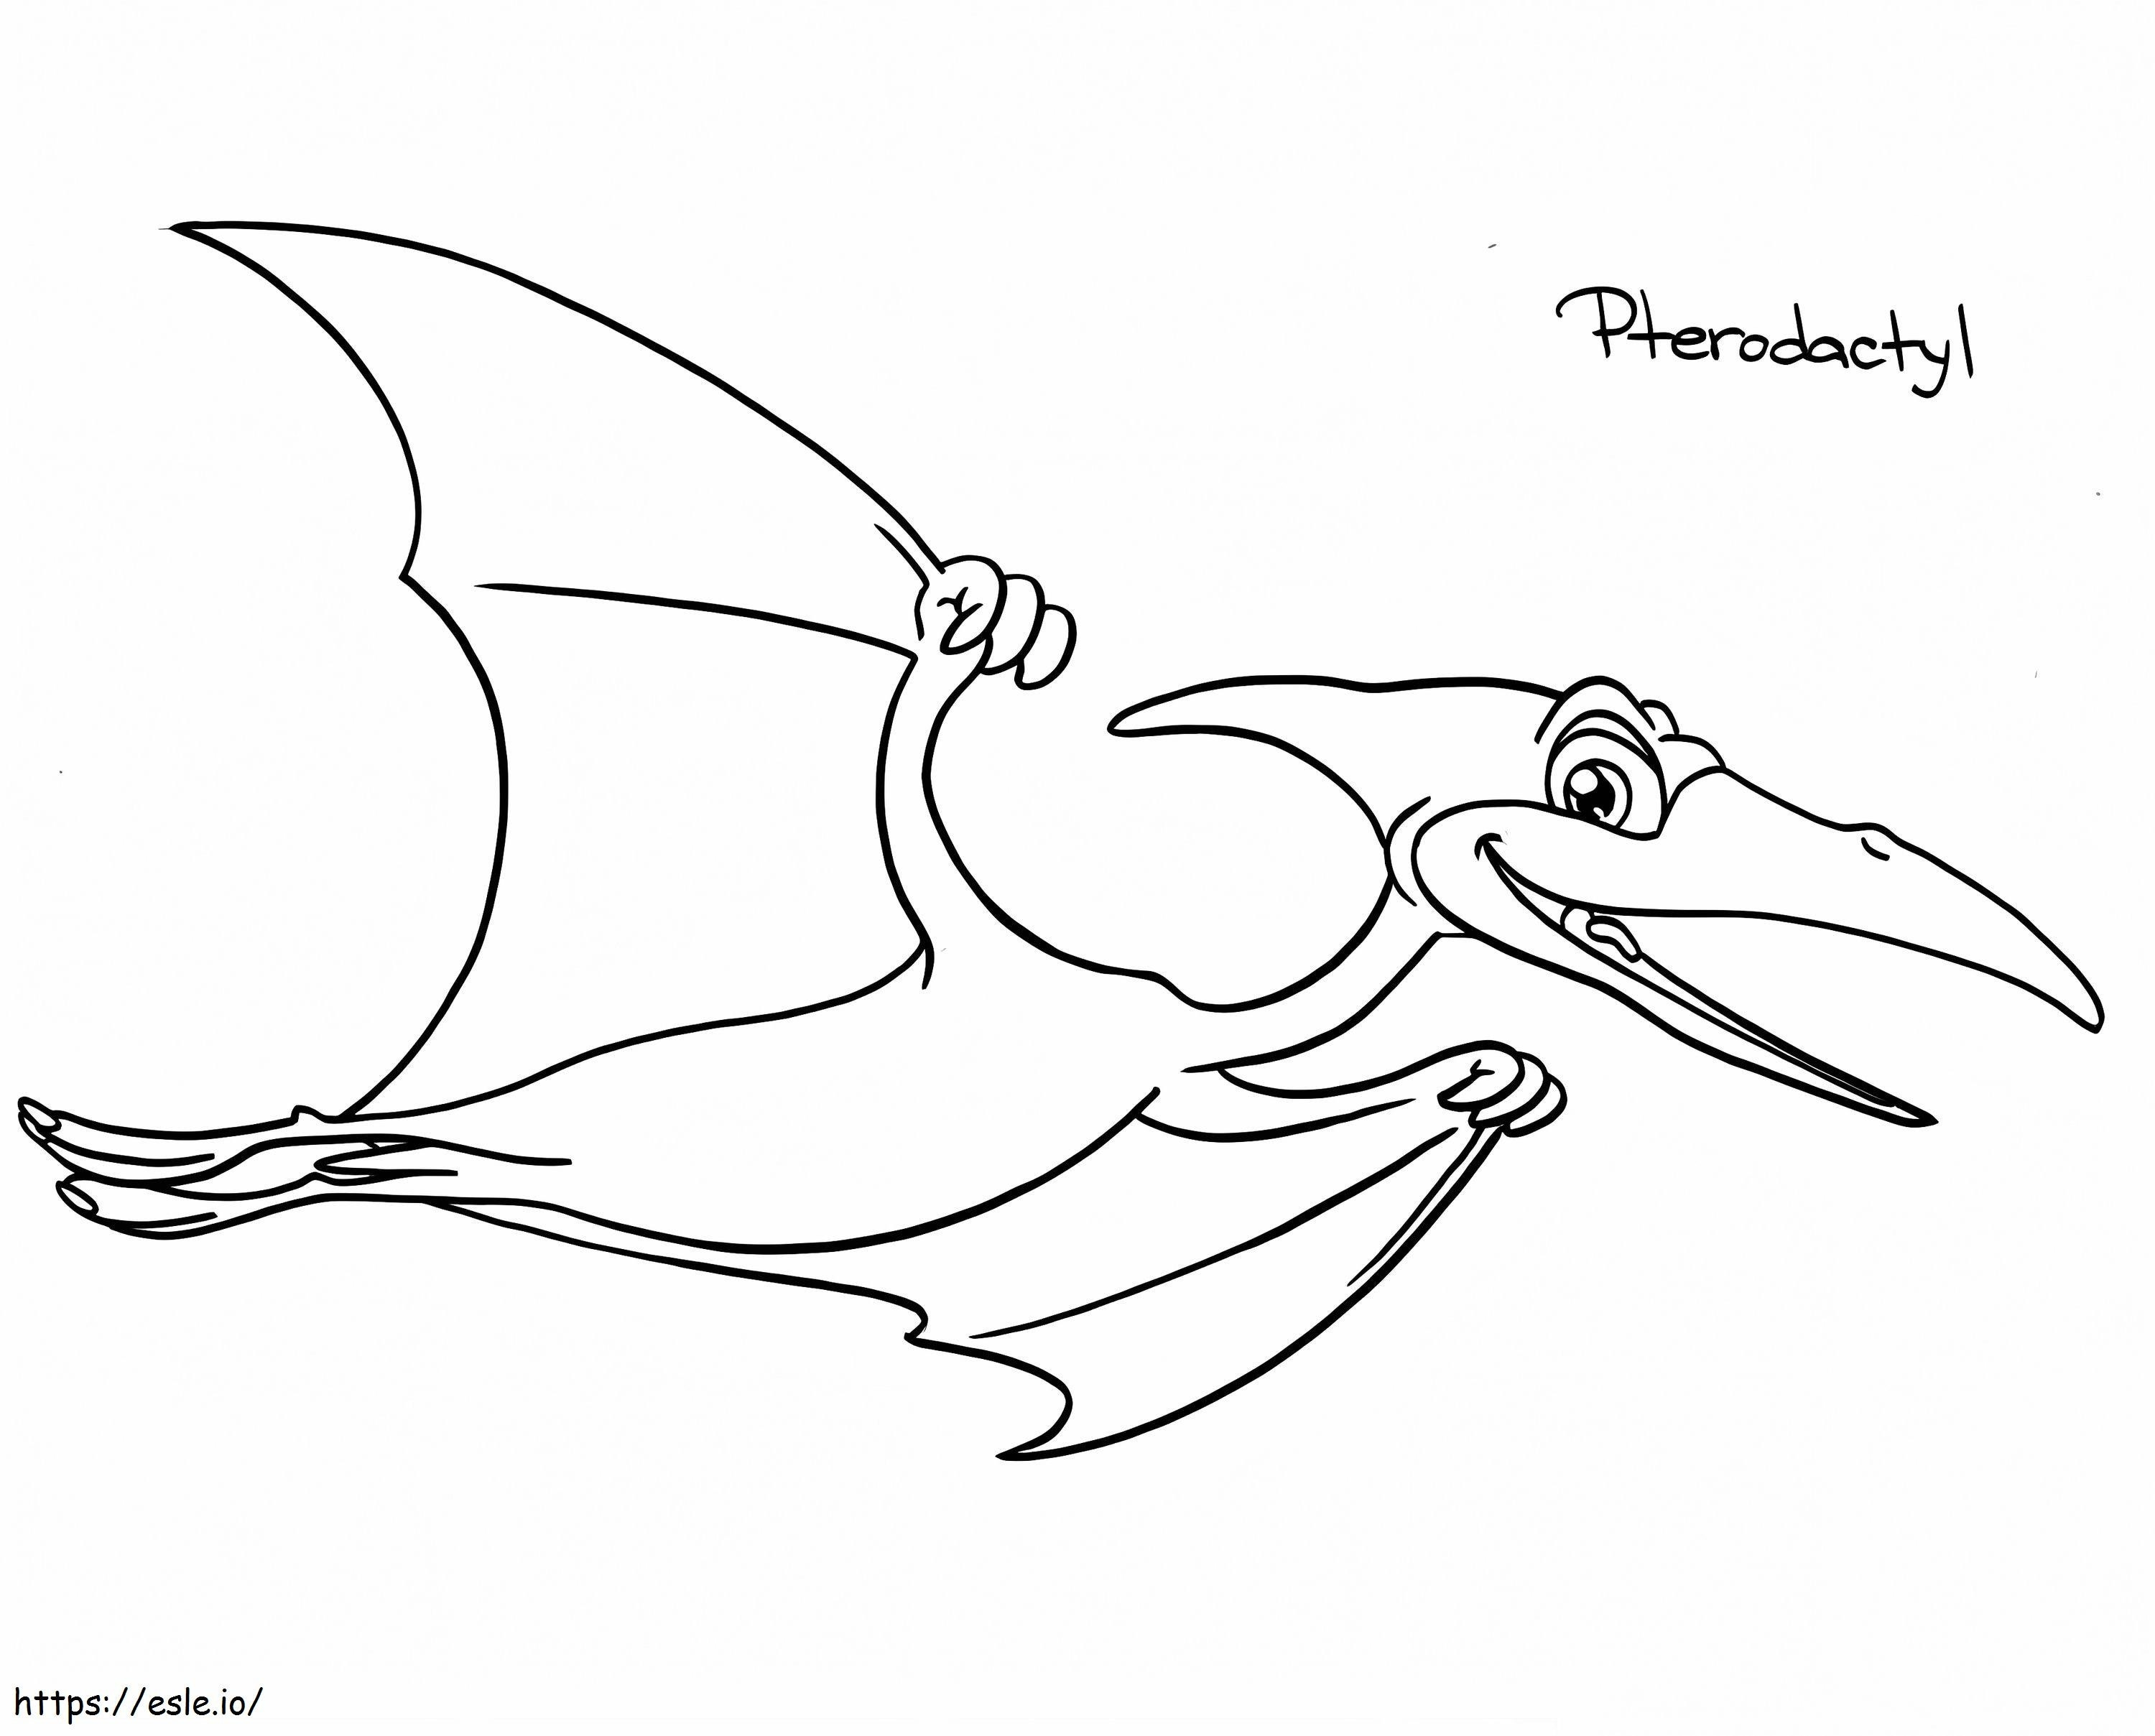 Lachende Pterodactylus kleurplaat kleurplaat